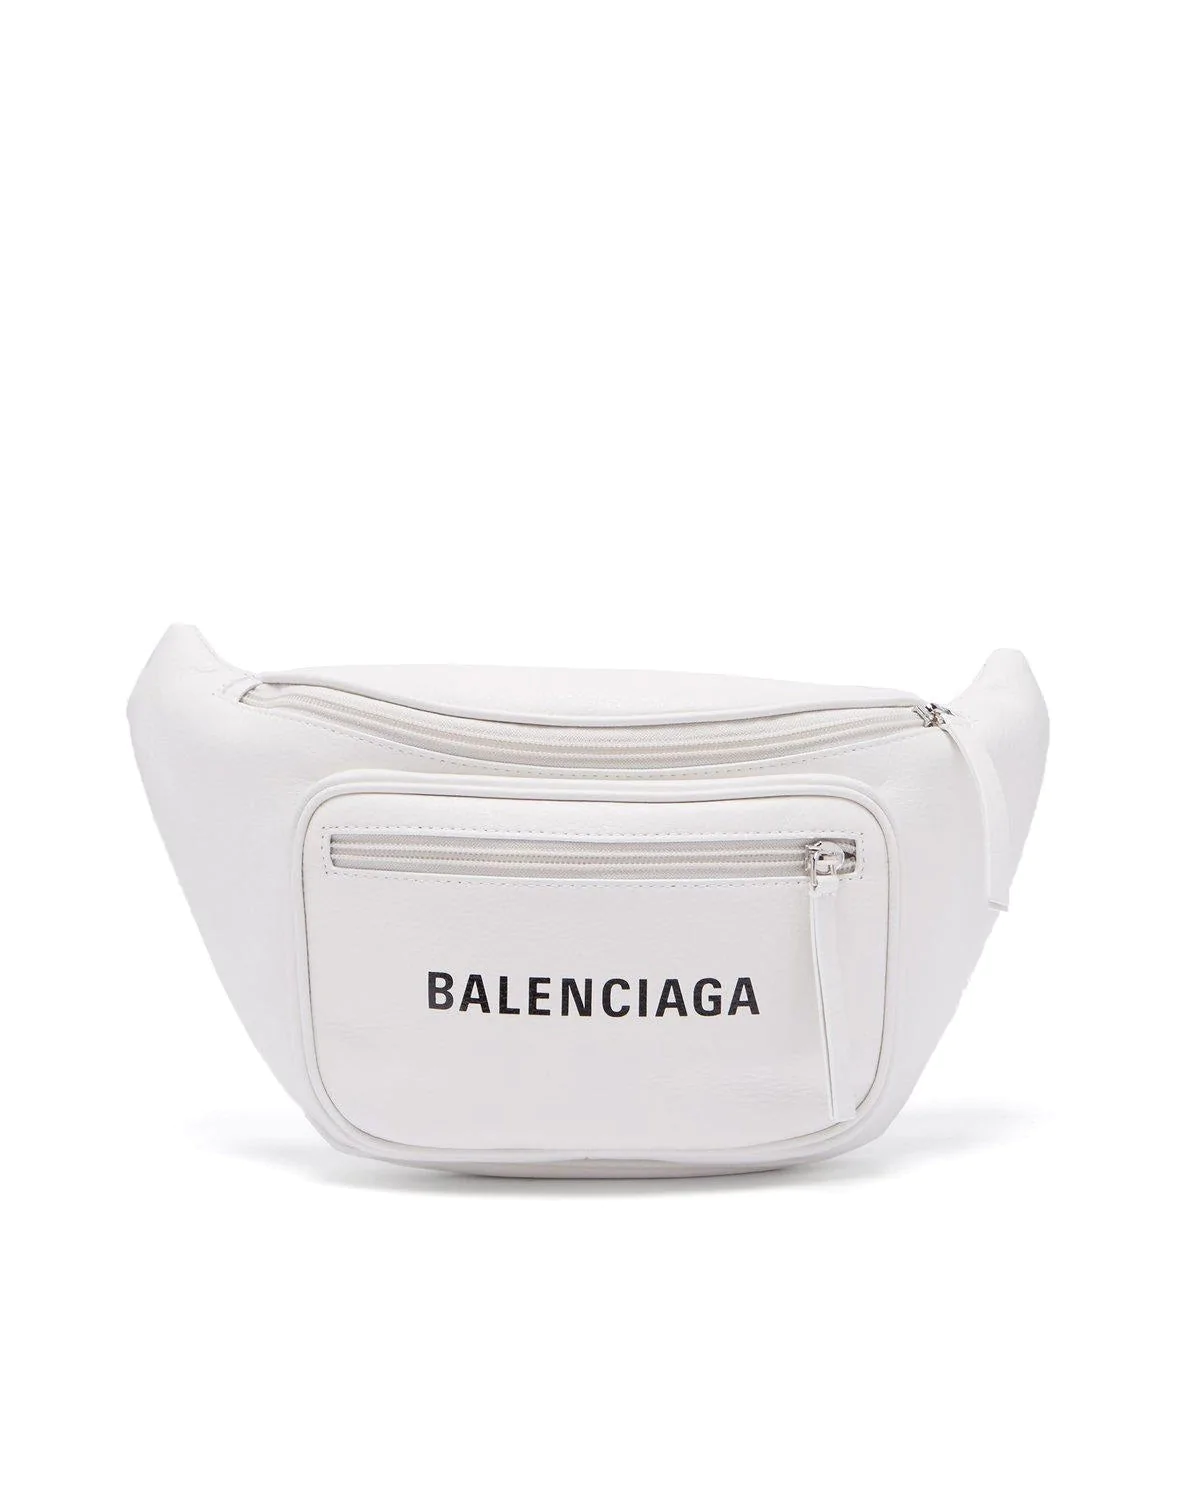 Balenciaga Men's White Everyday Leather Belt Bag